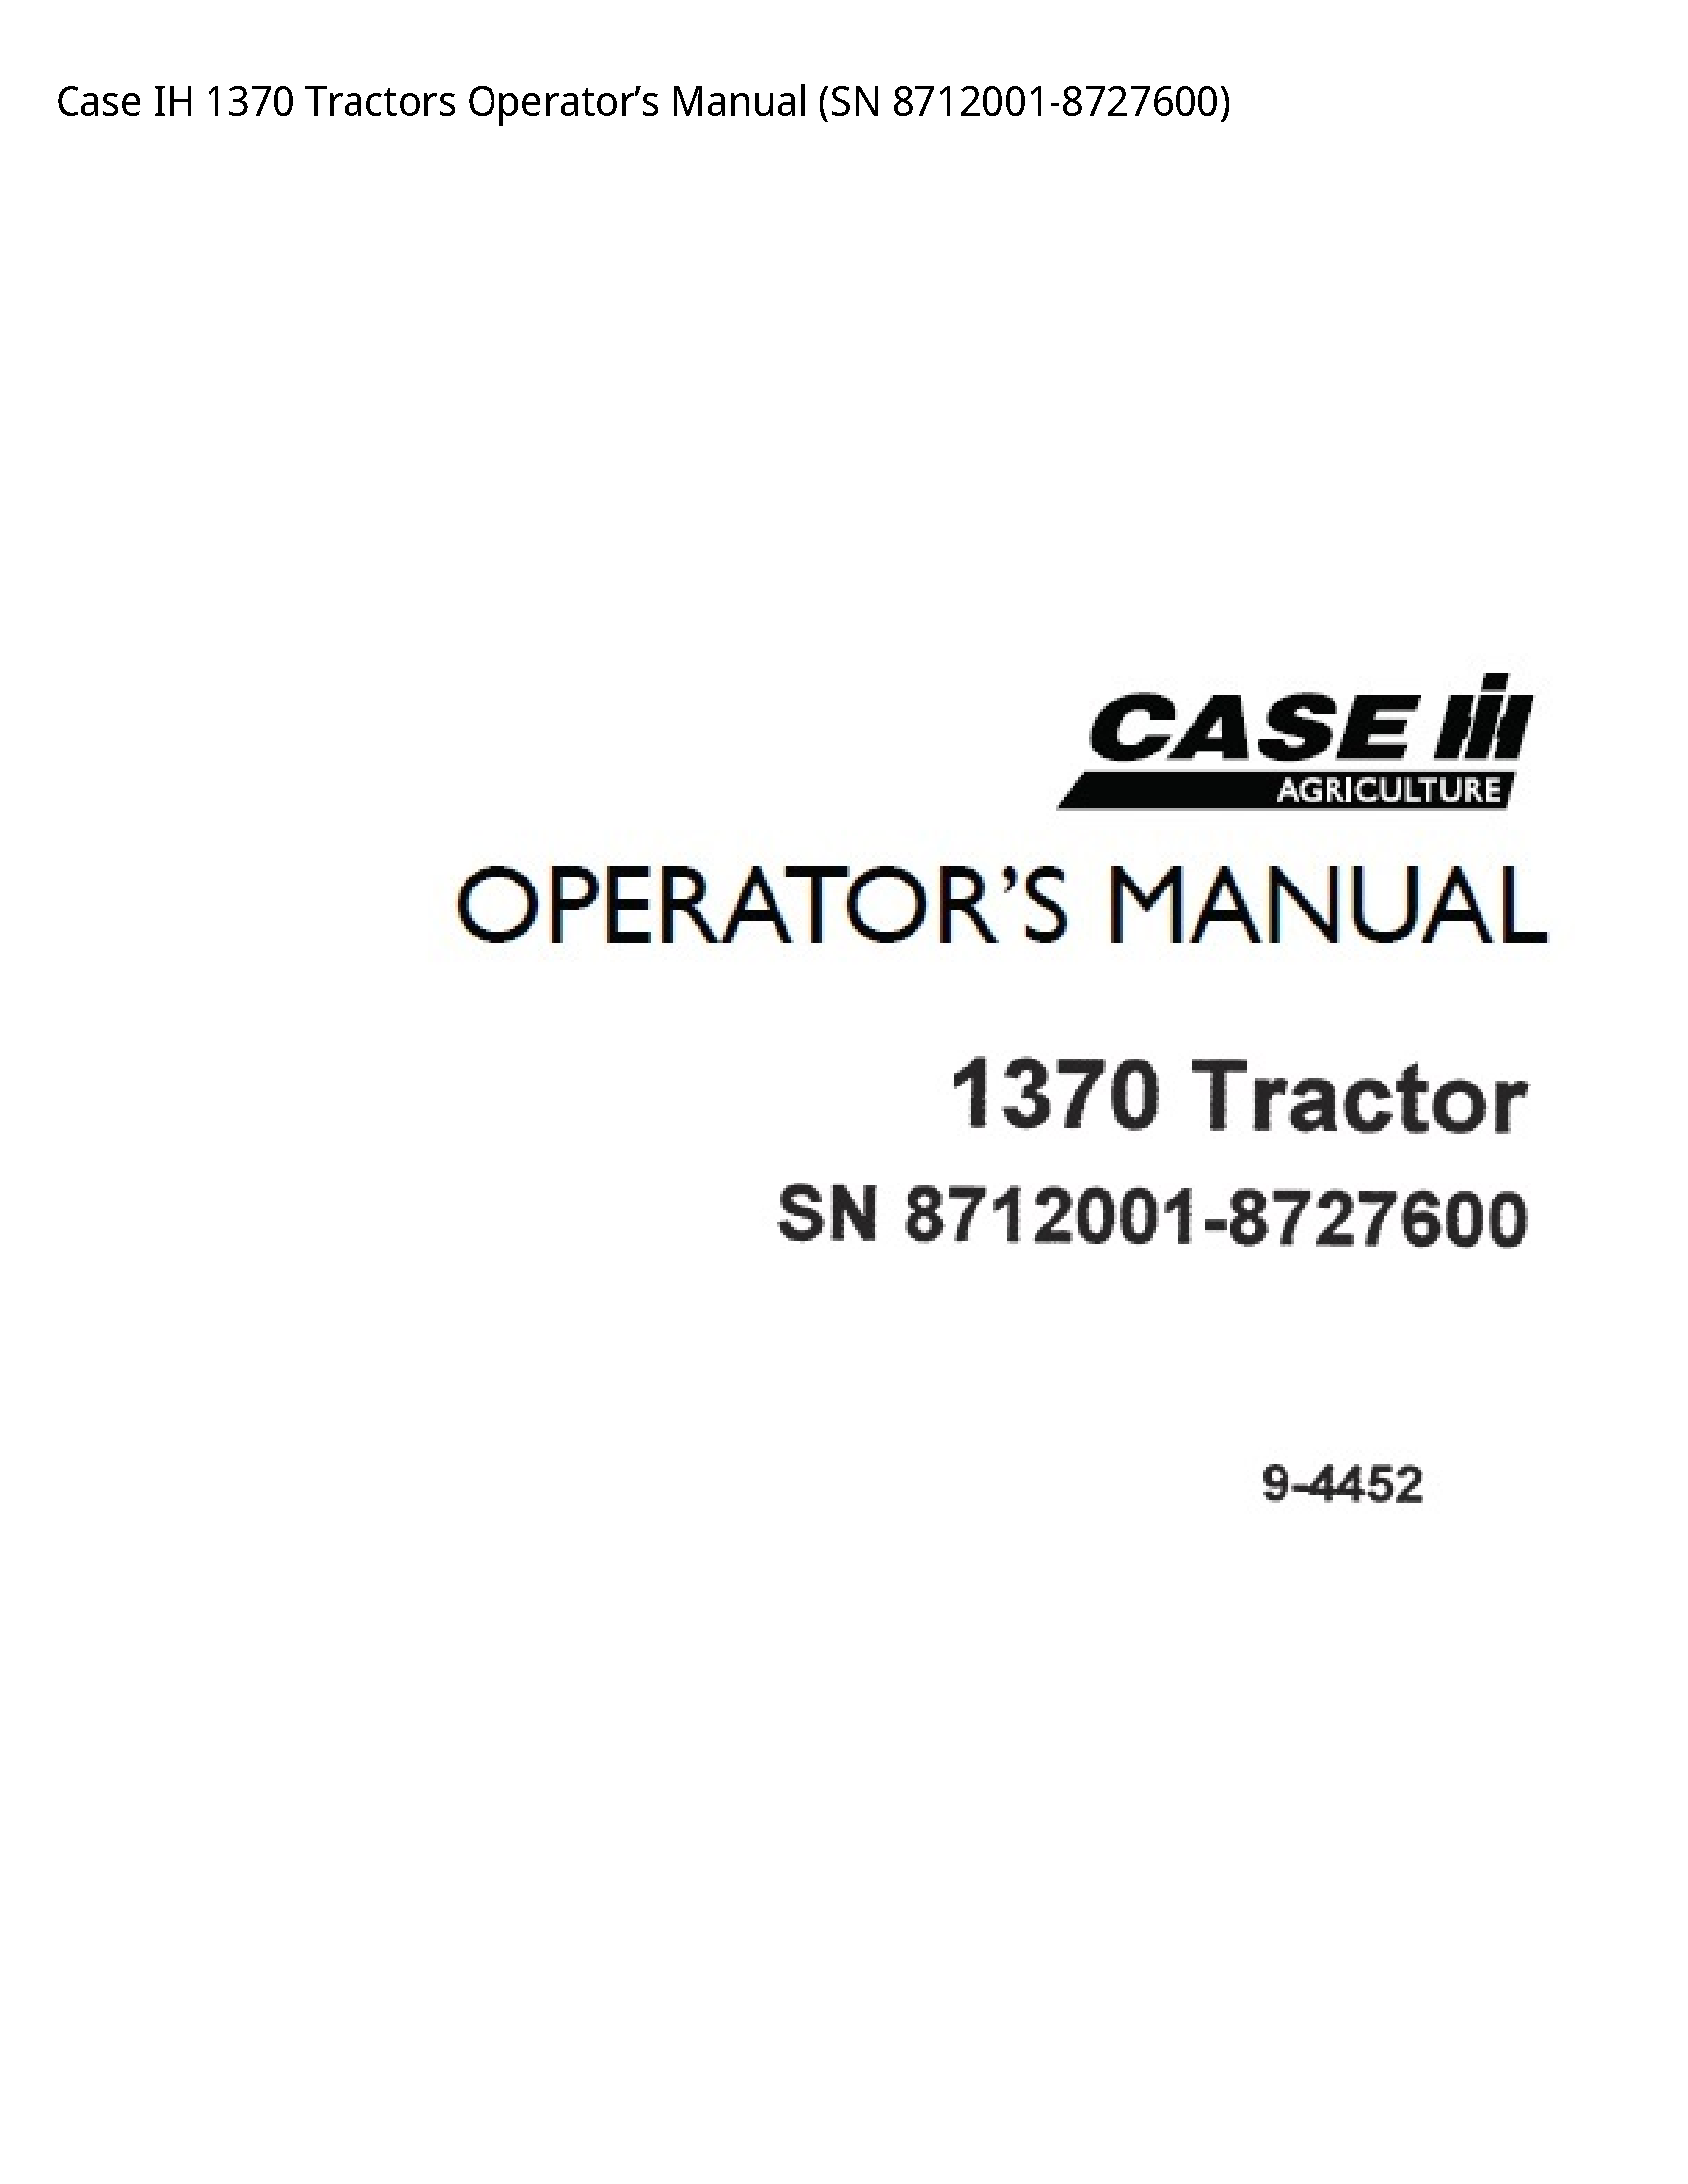 Case/Case IH 1370 IH Tractors Operator’s manual